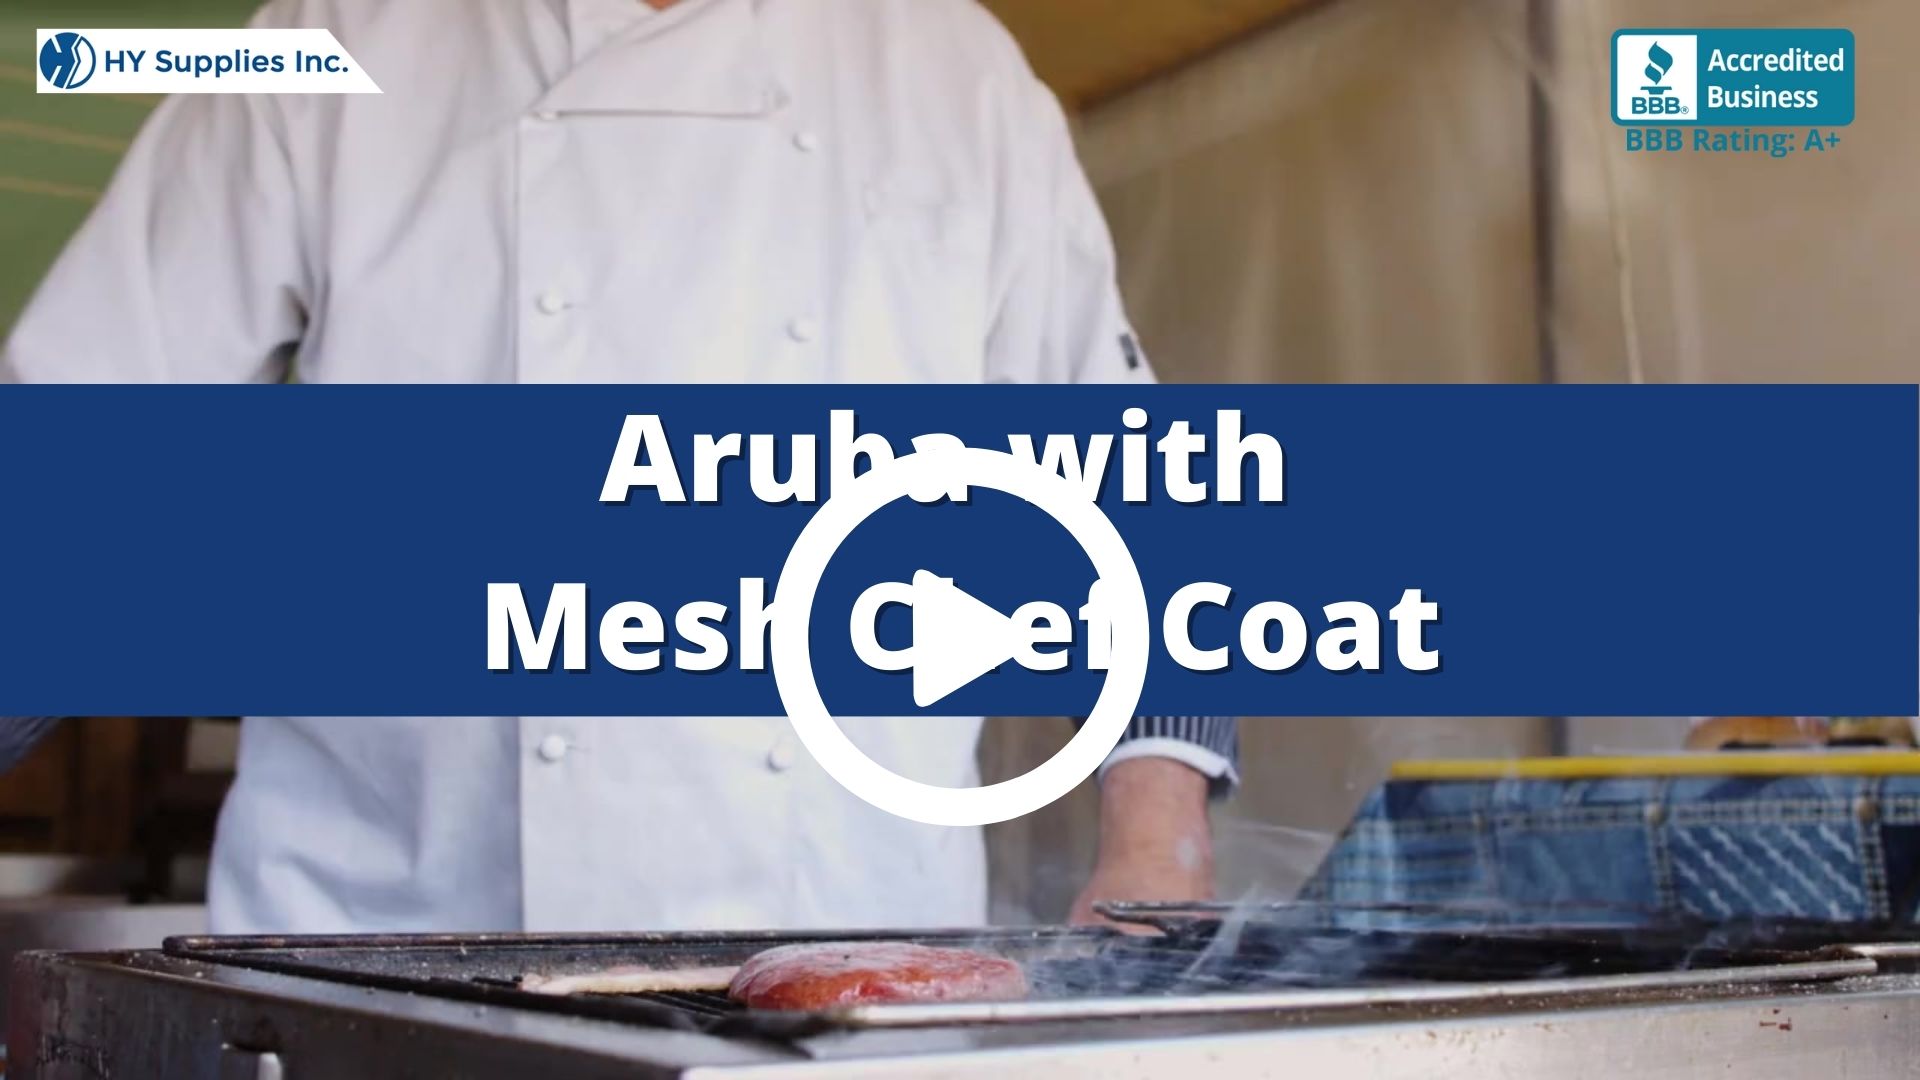 Aruba with Mesh Chef Coat